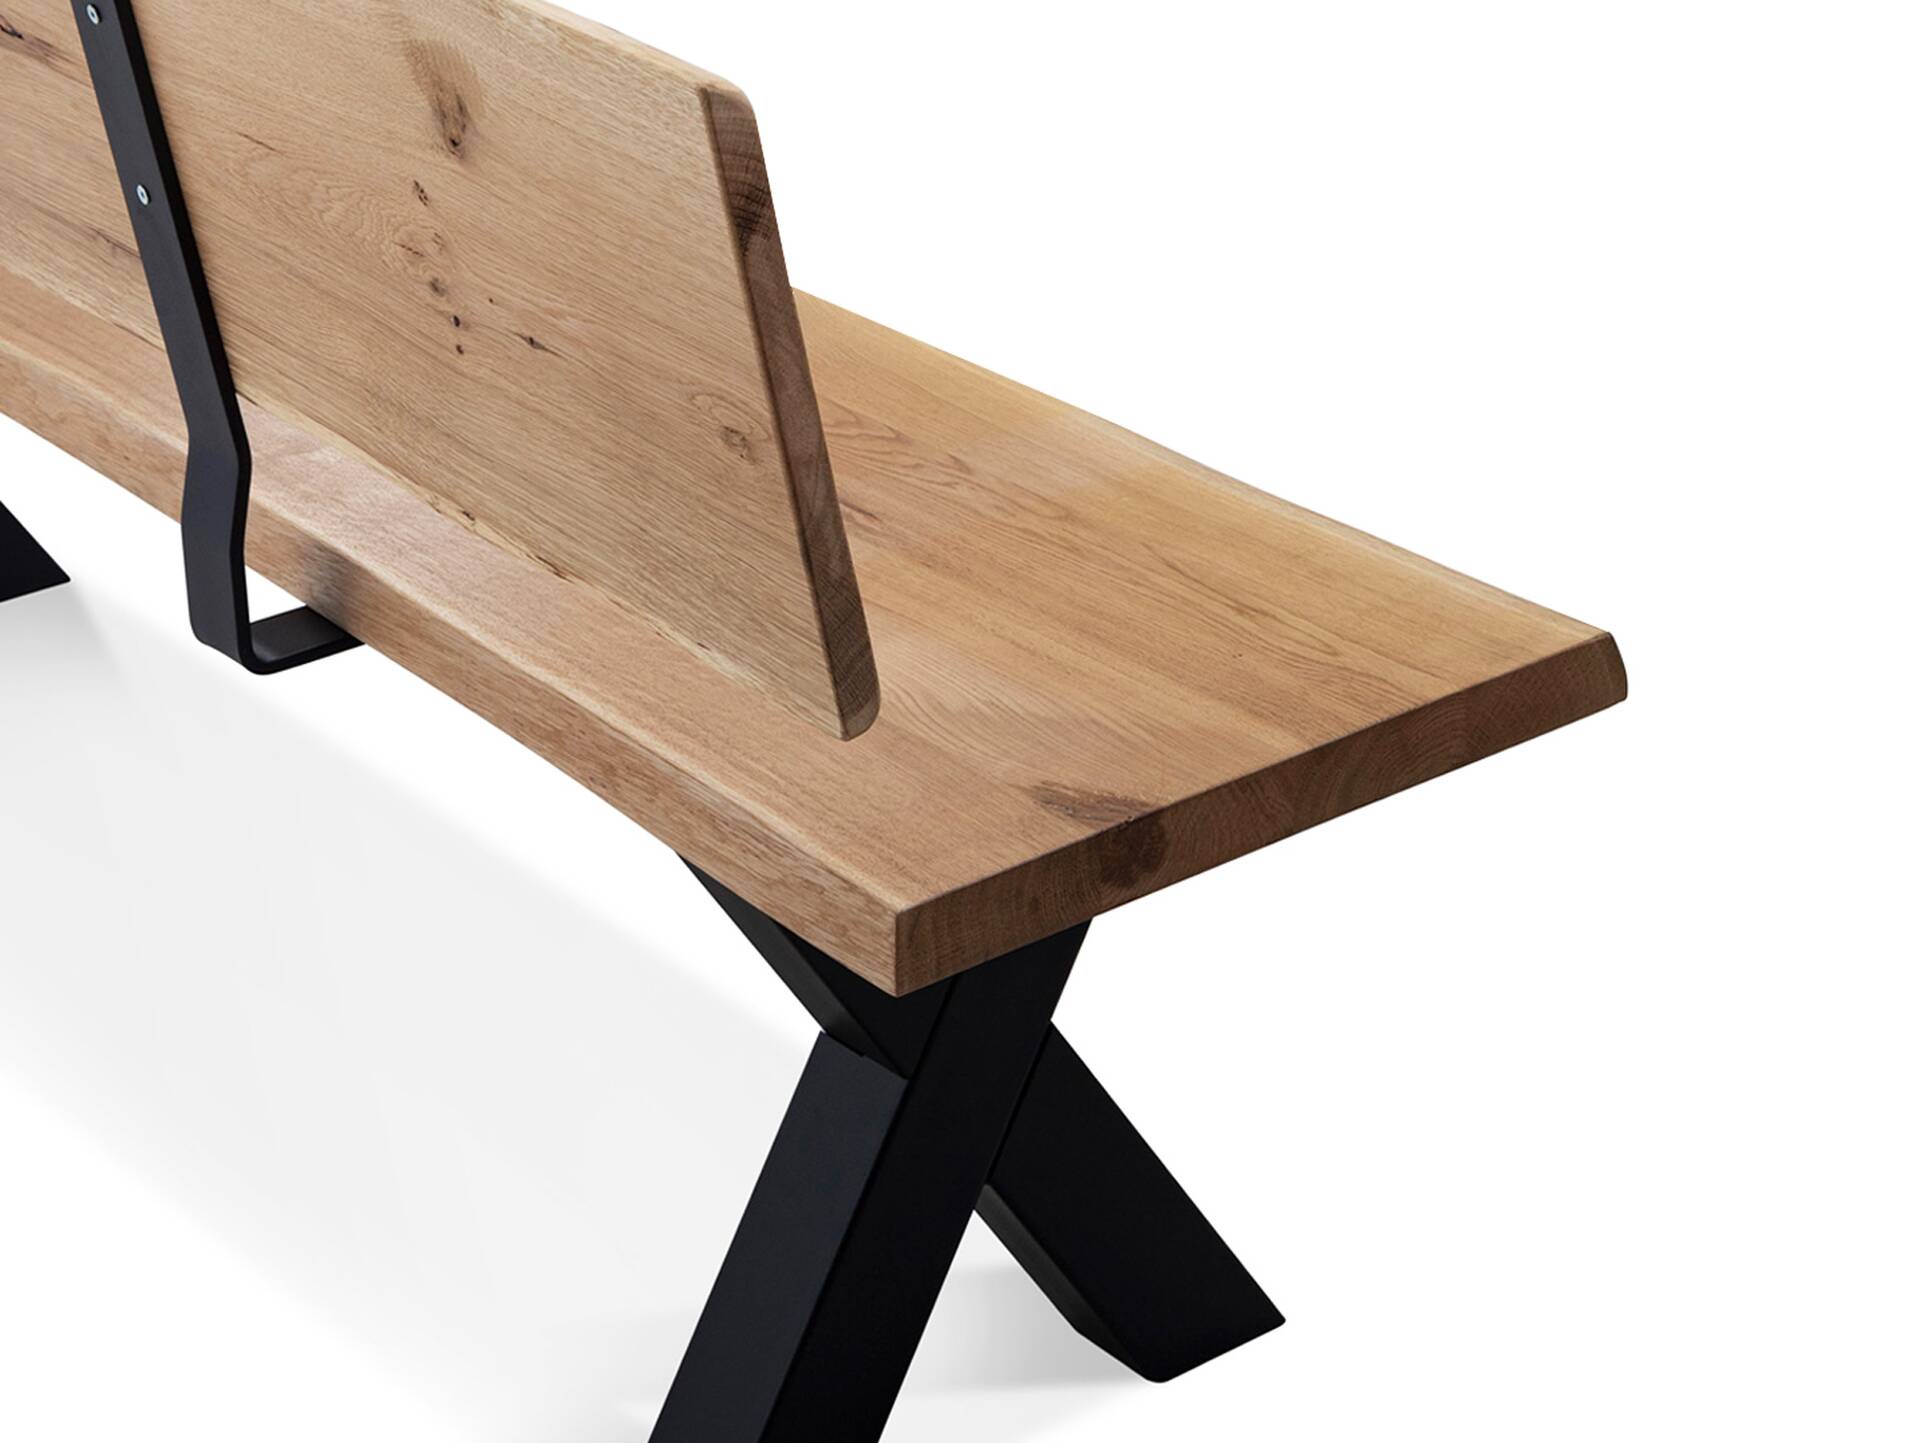 COLORADO Sitzbank mit gerader Kante, Material Massivholz/Metall, Eiche geölt 